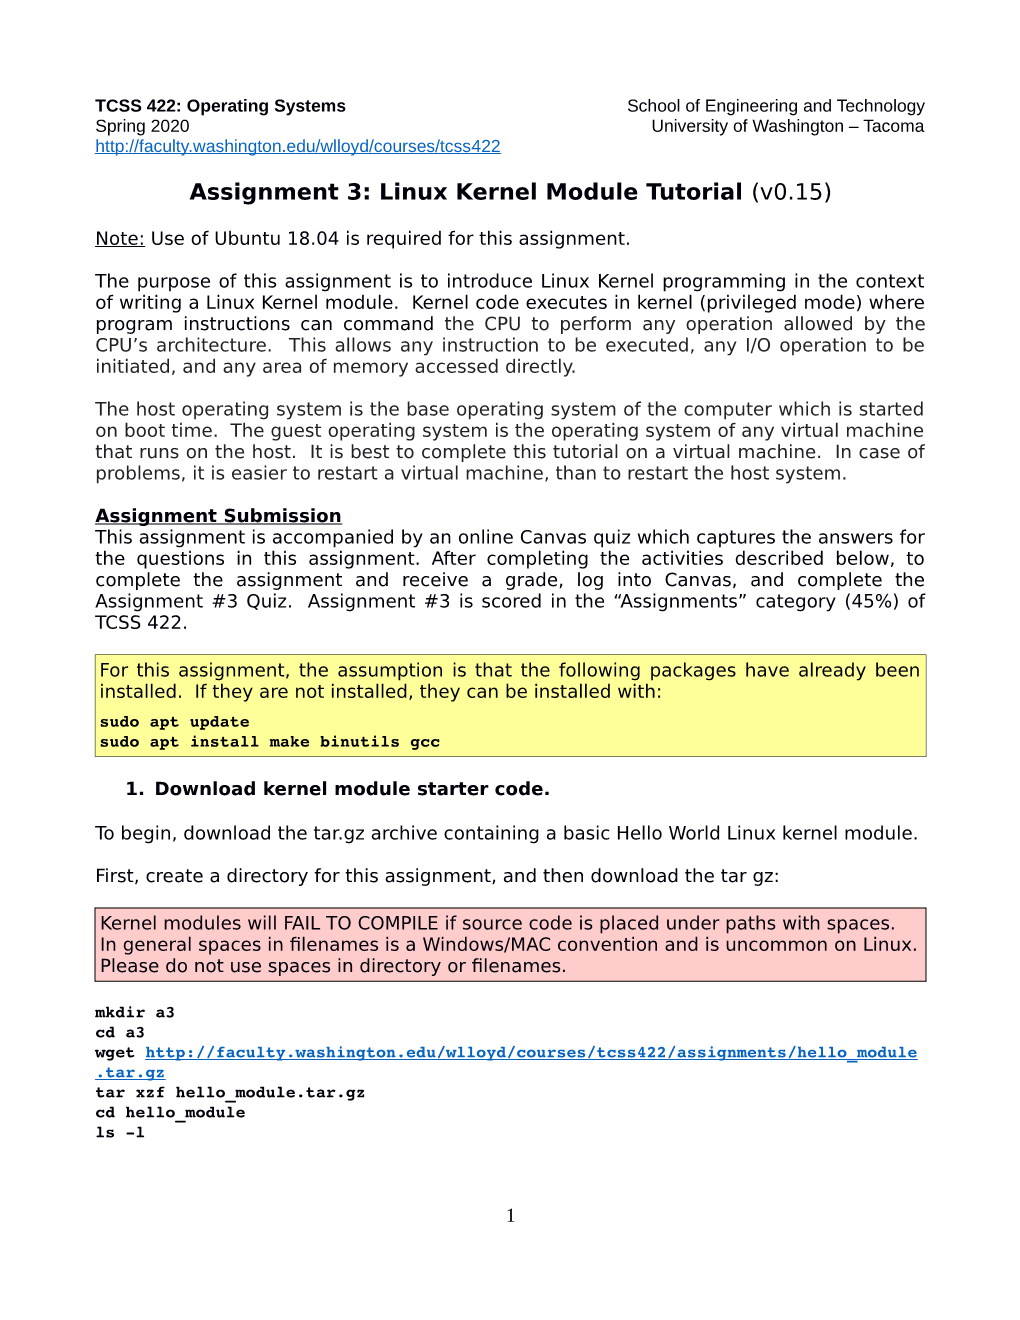 Assignment 3: Linux Kernel Module Tutorial (V0.15)